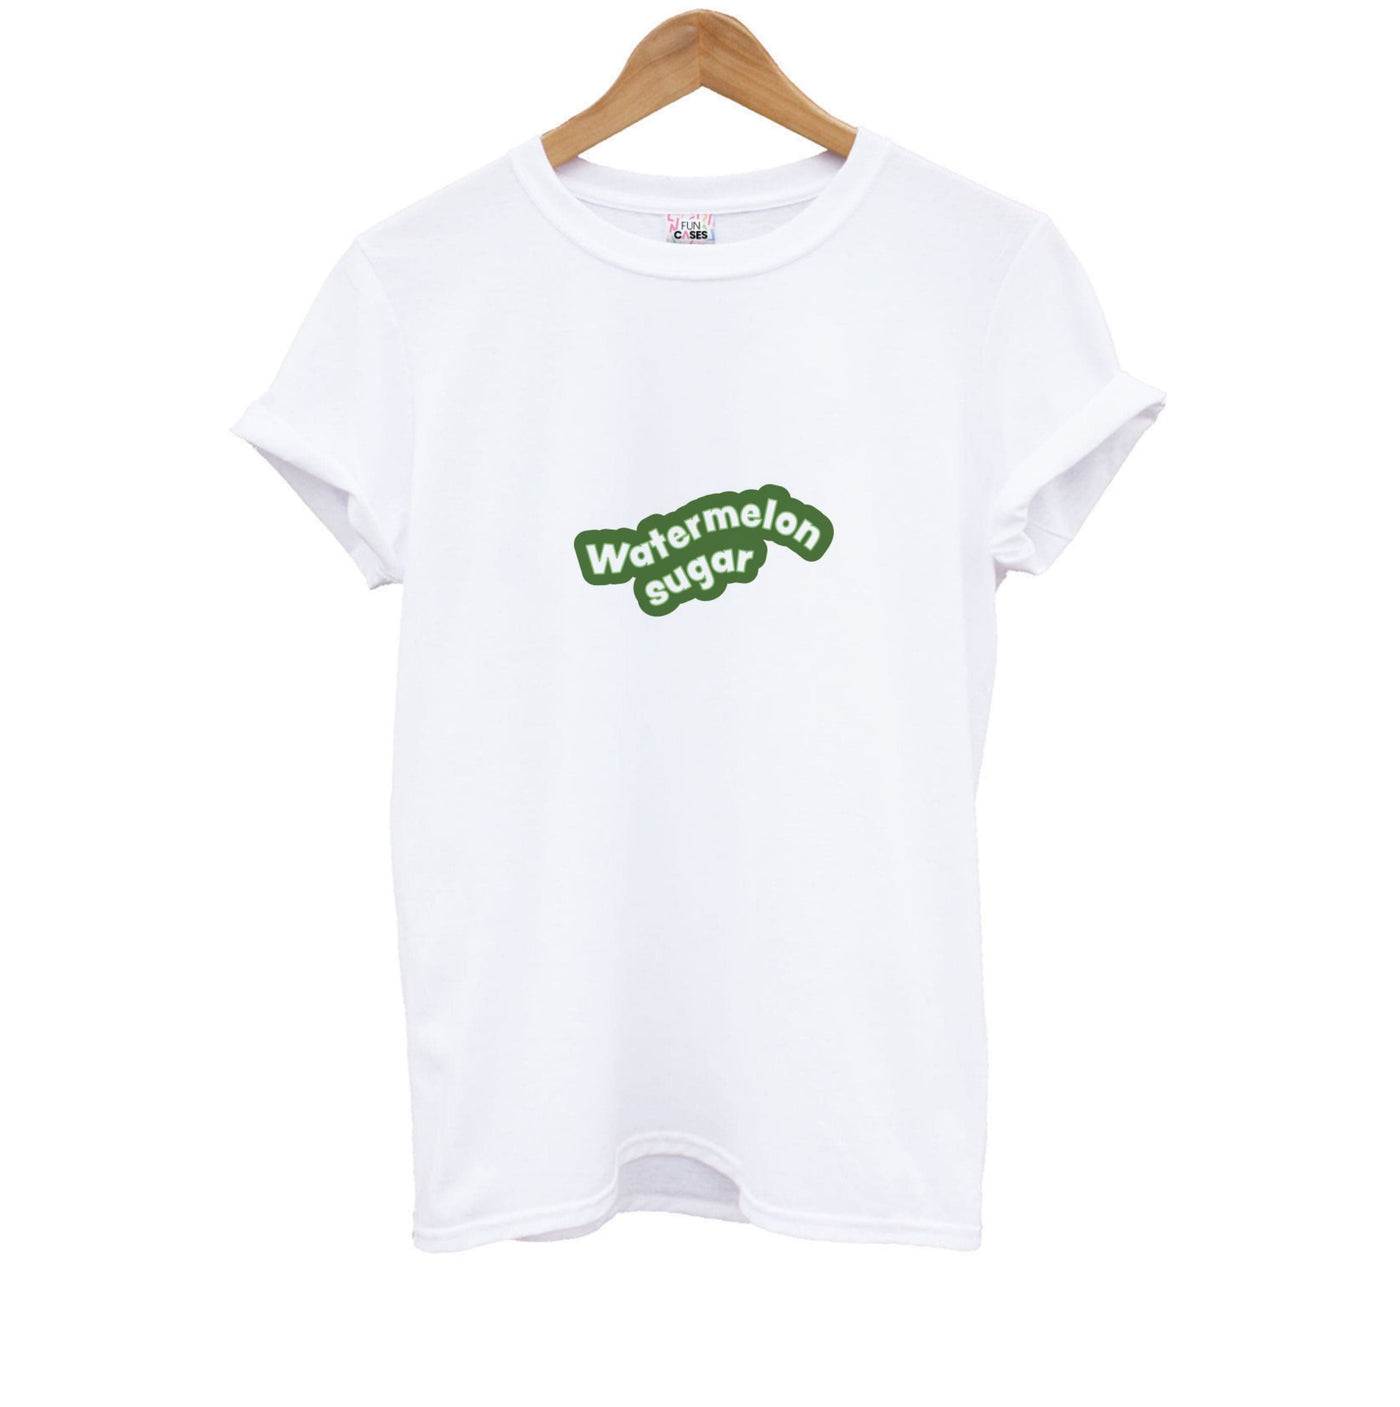 Watermelon Sugar Abstract - Harry Kids T-Shirt